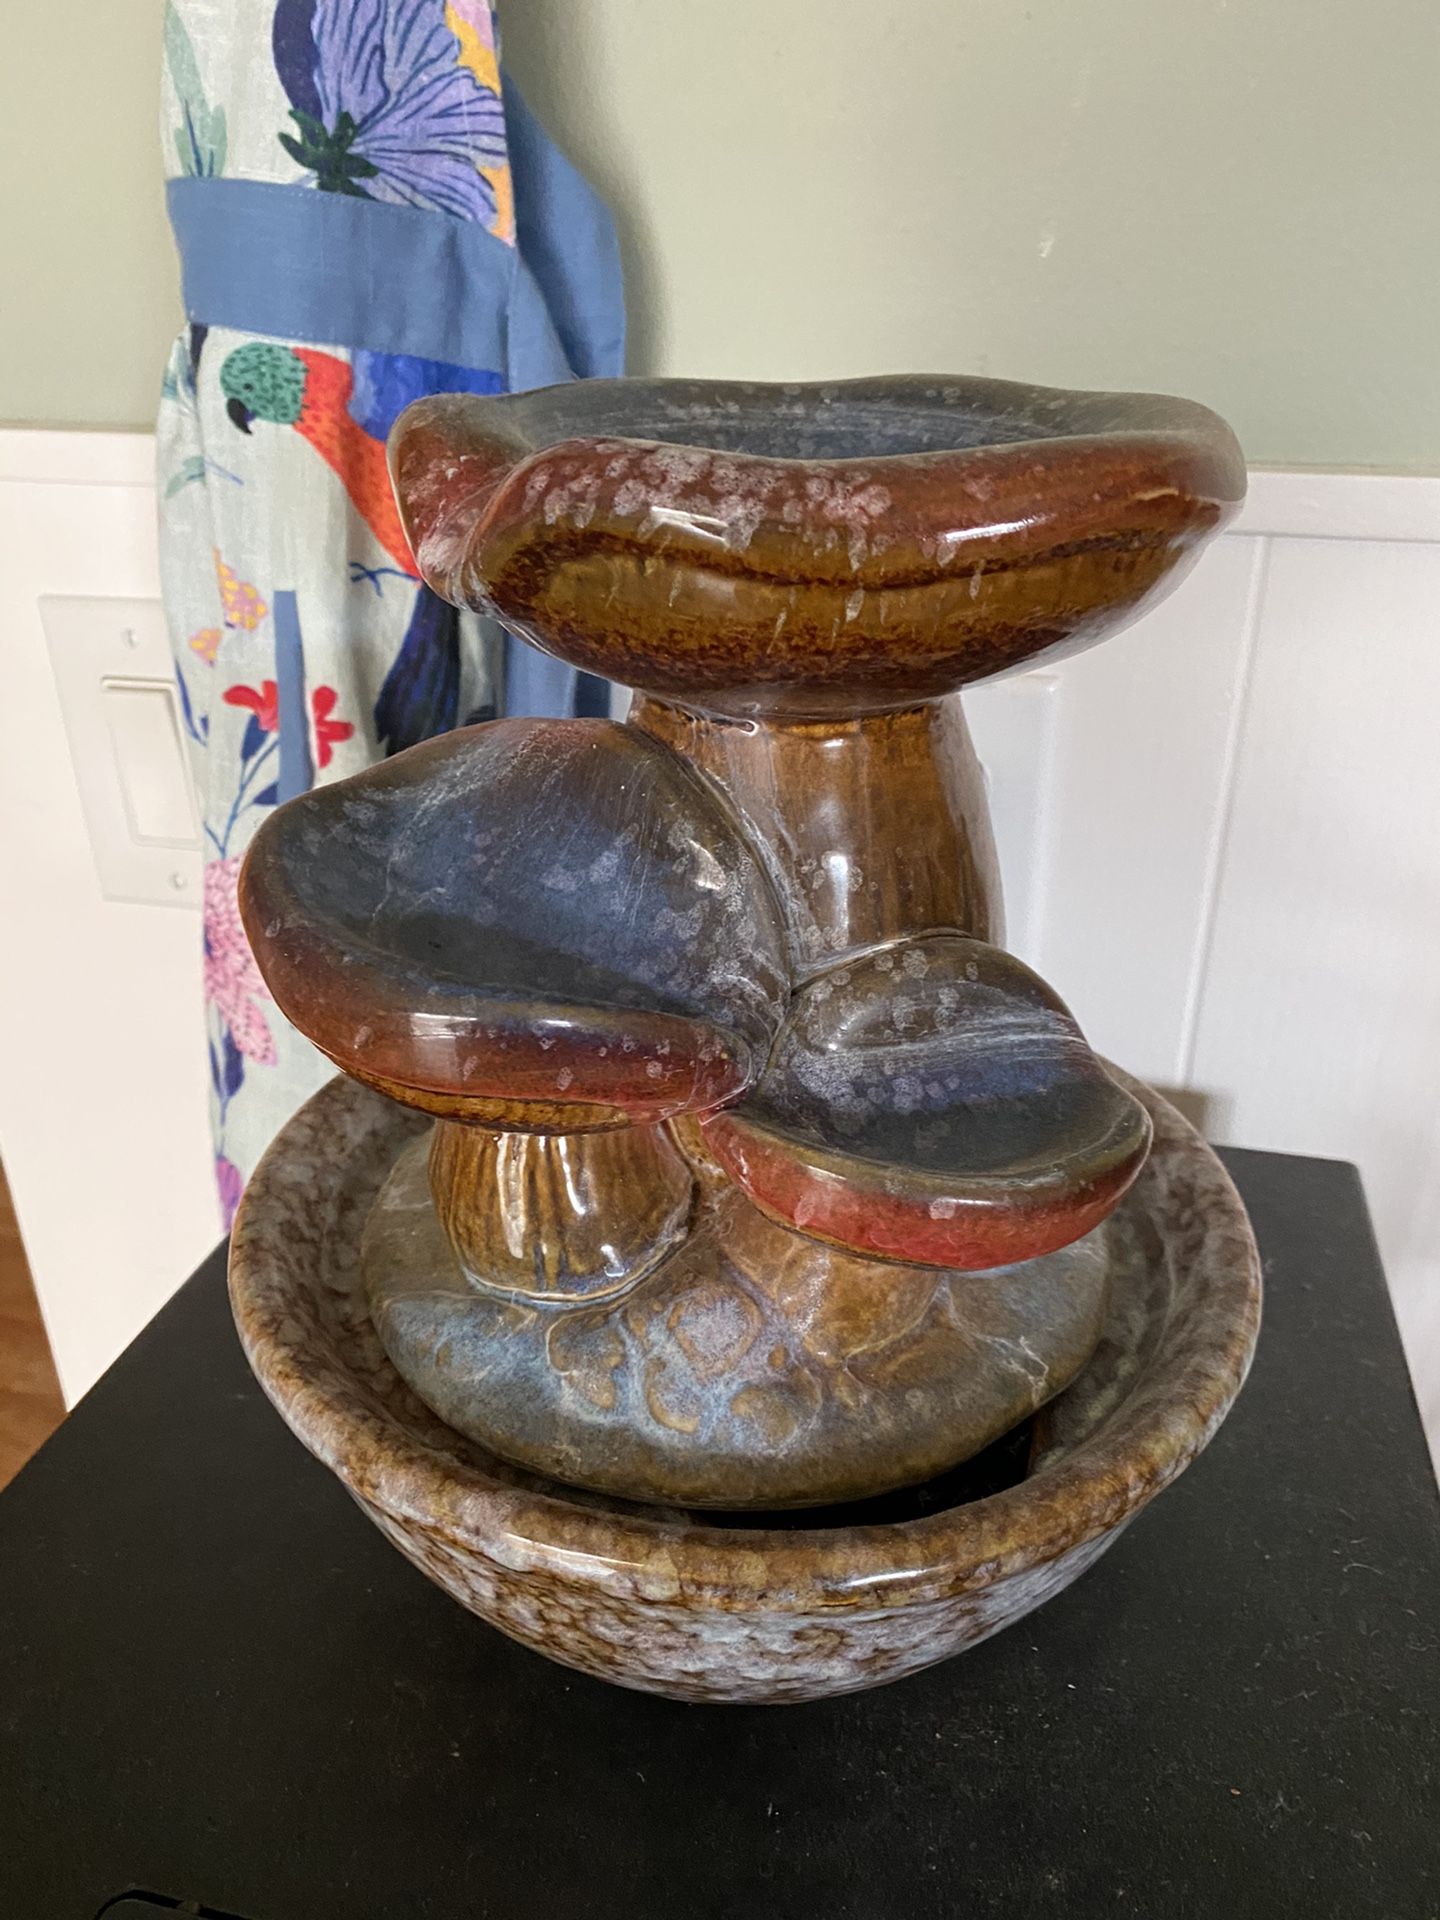 Mushroom waterfall from lamps plus $($150 new)